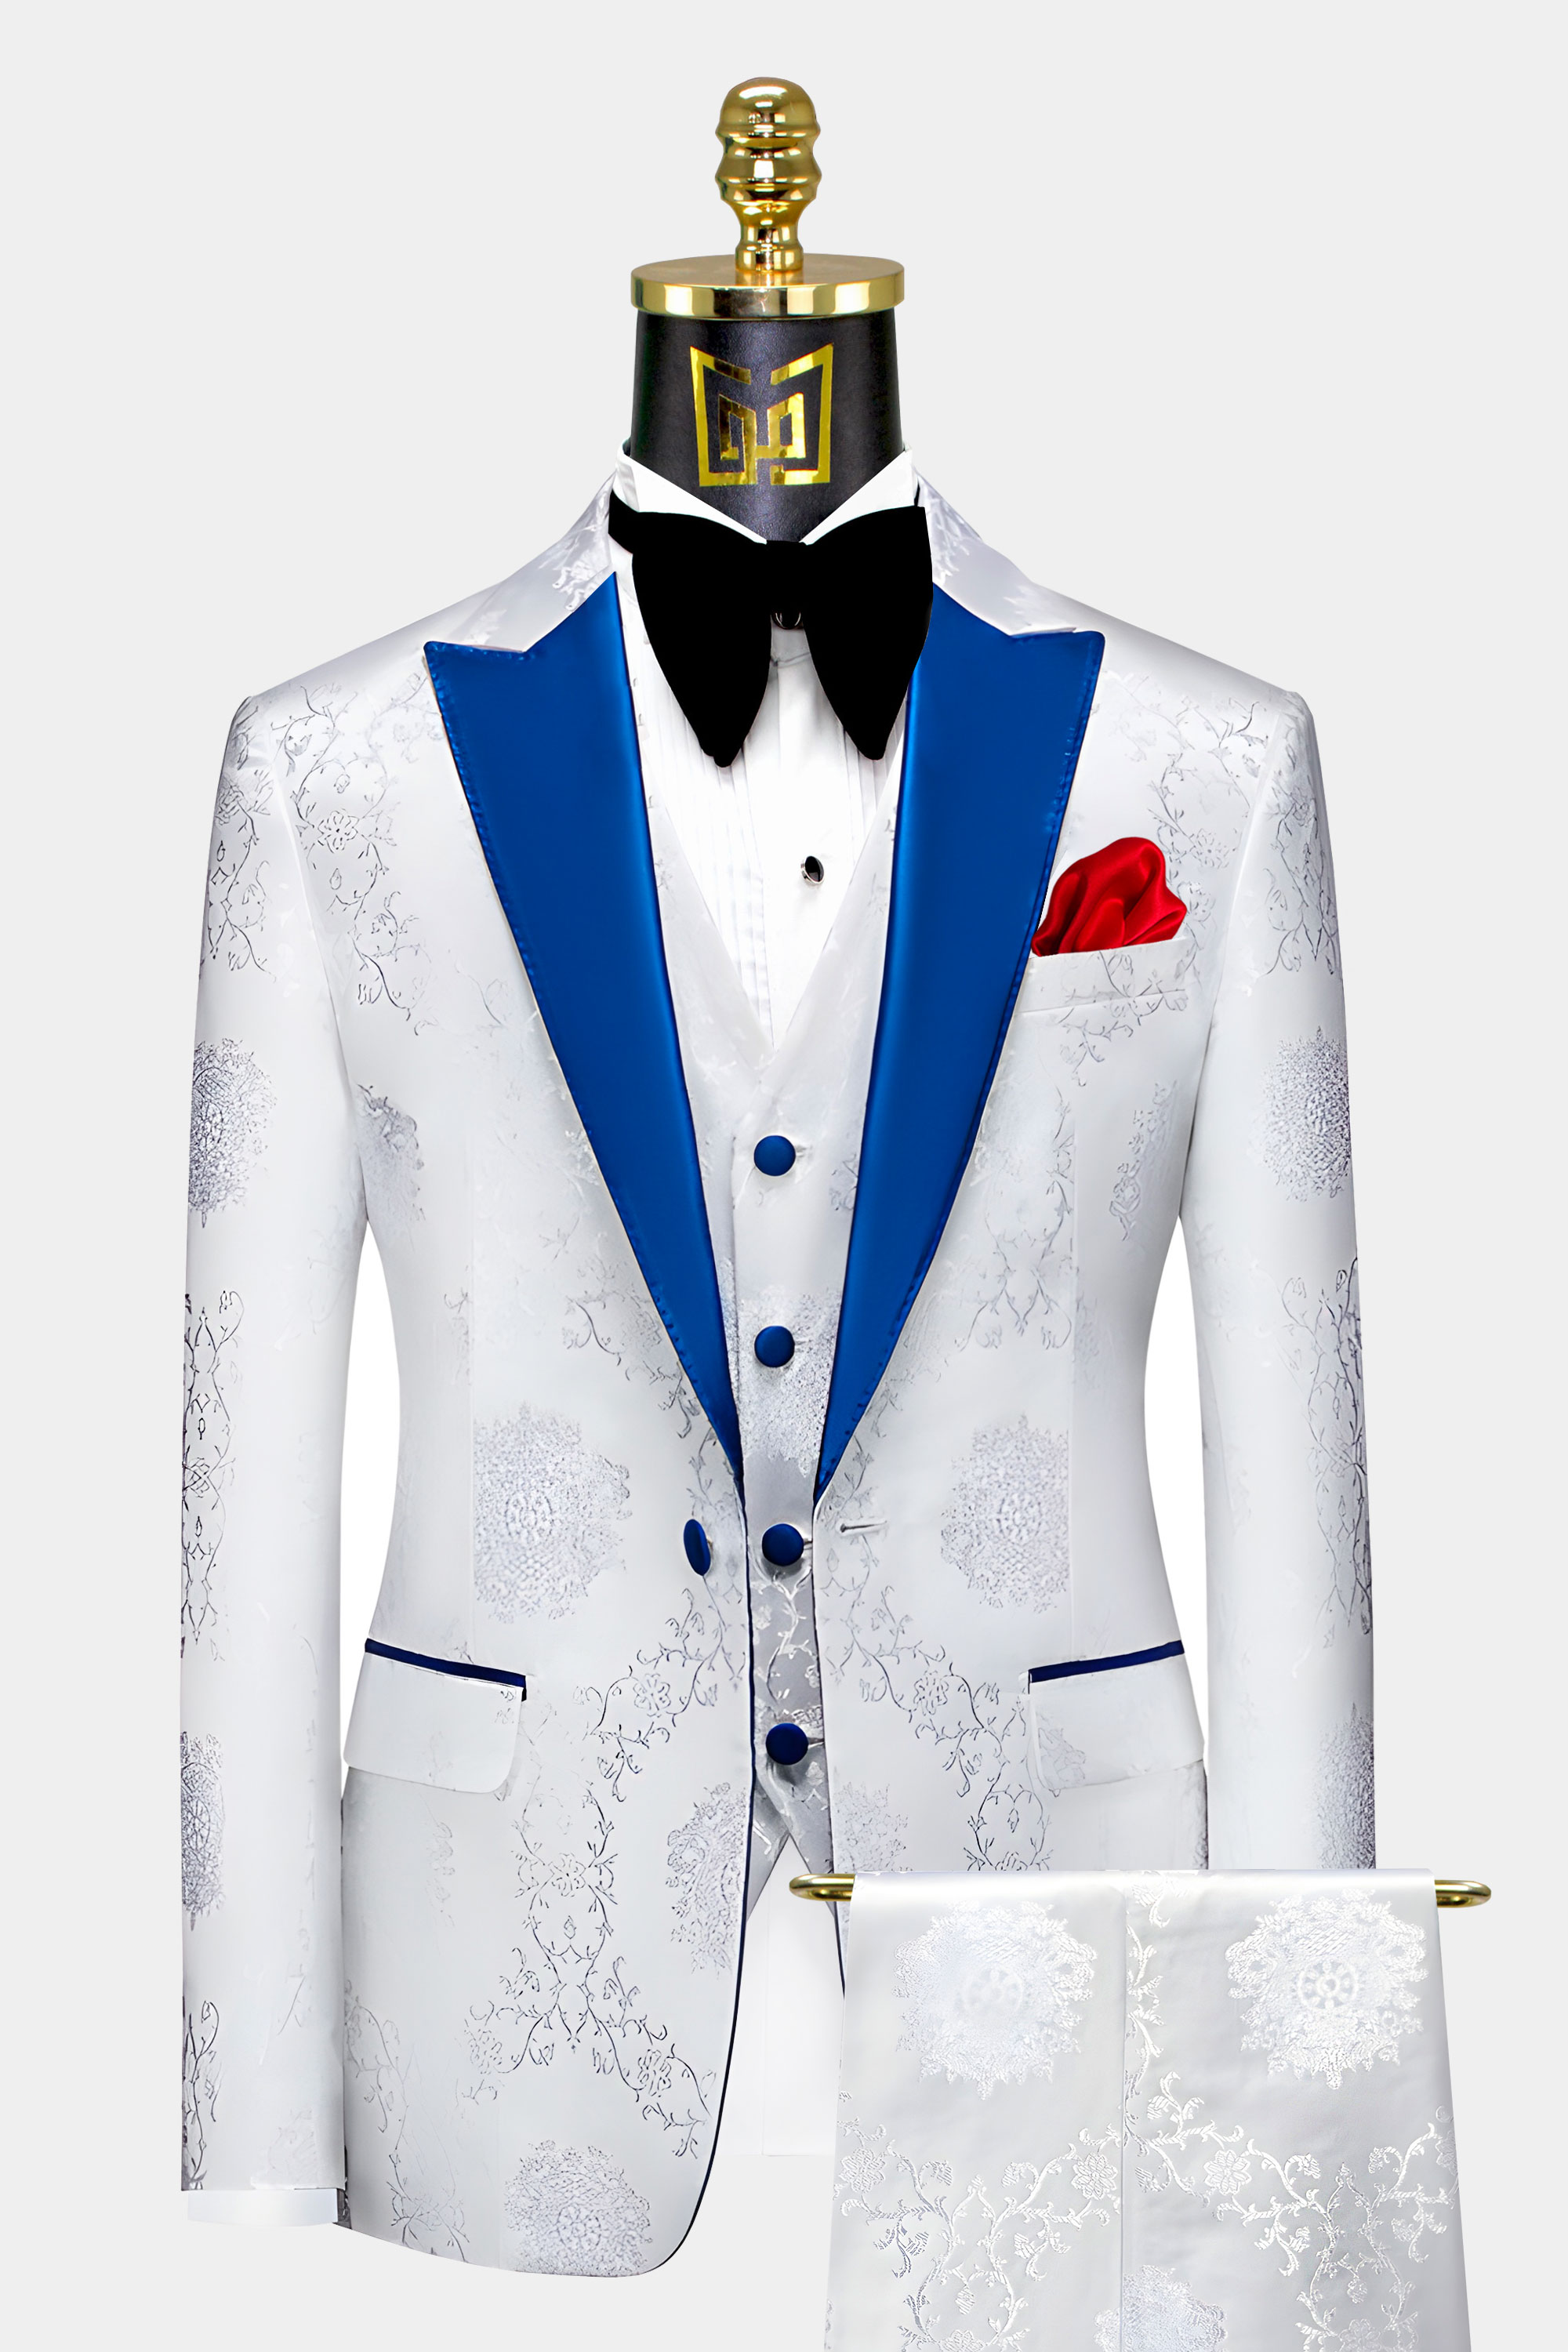 Mens-Royal-Blue-and-White-Tuxedo-Wedding-Prom-Suit-from-Gentlemansguru.com